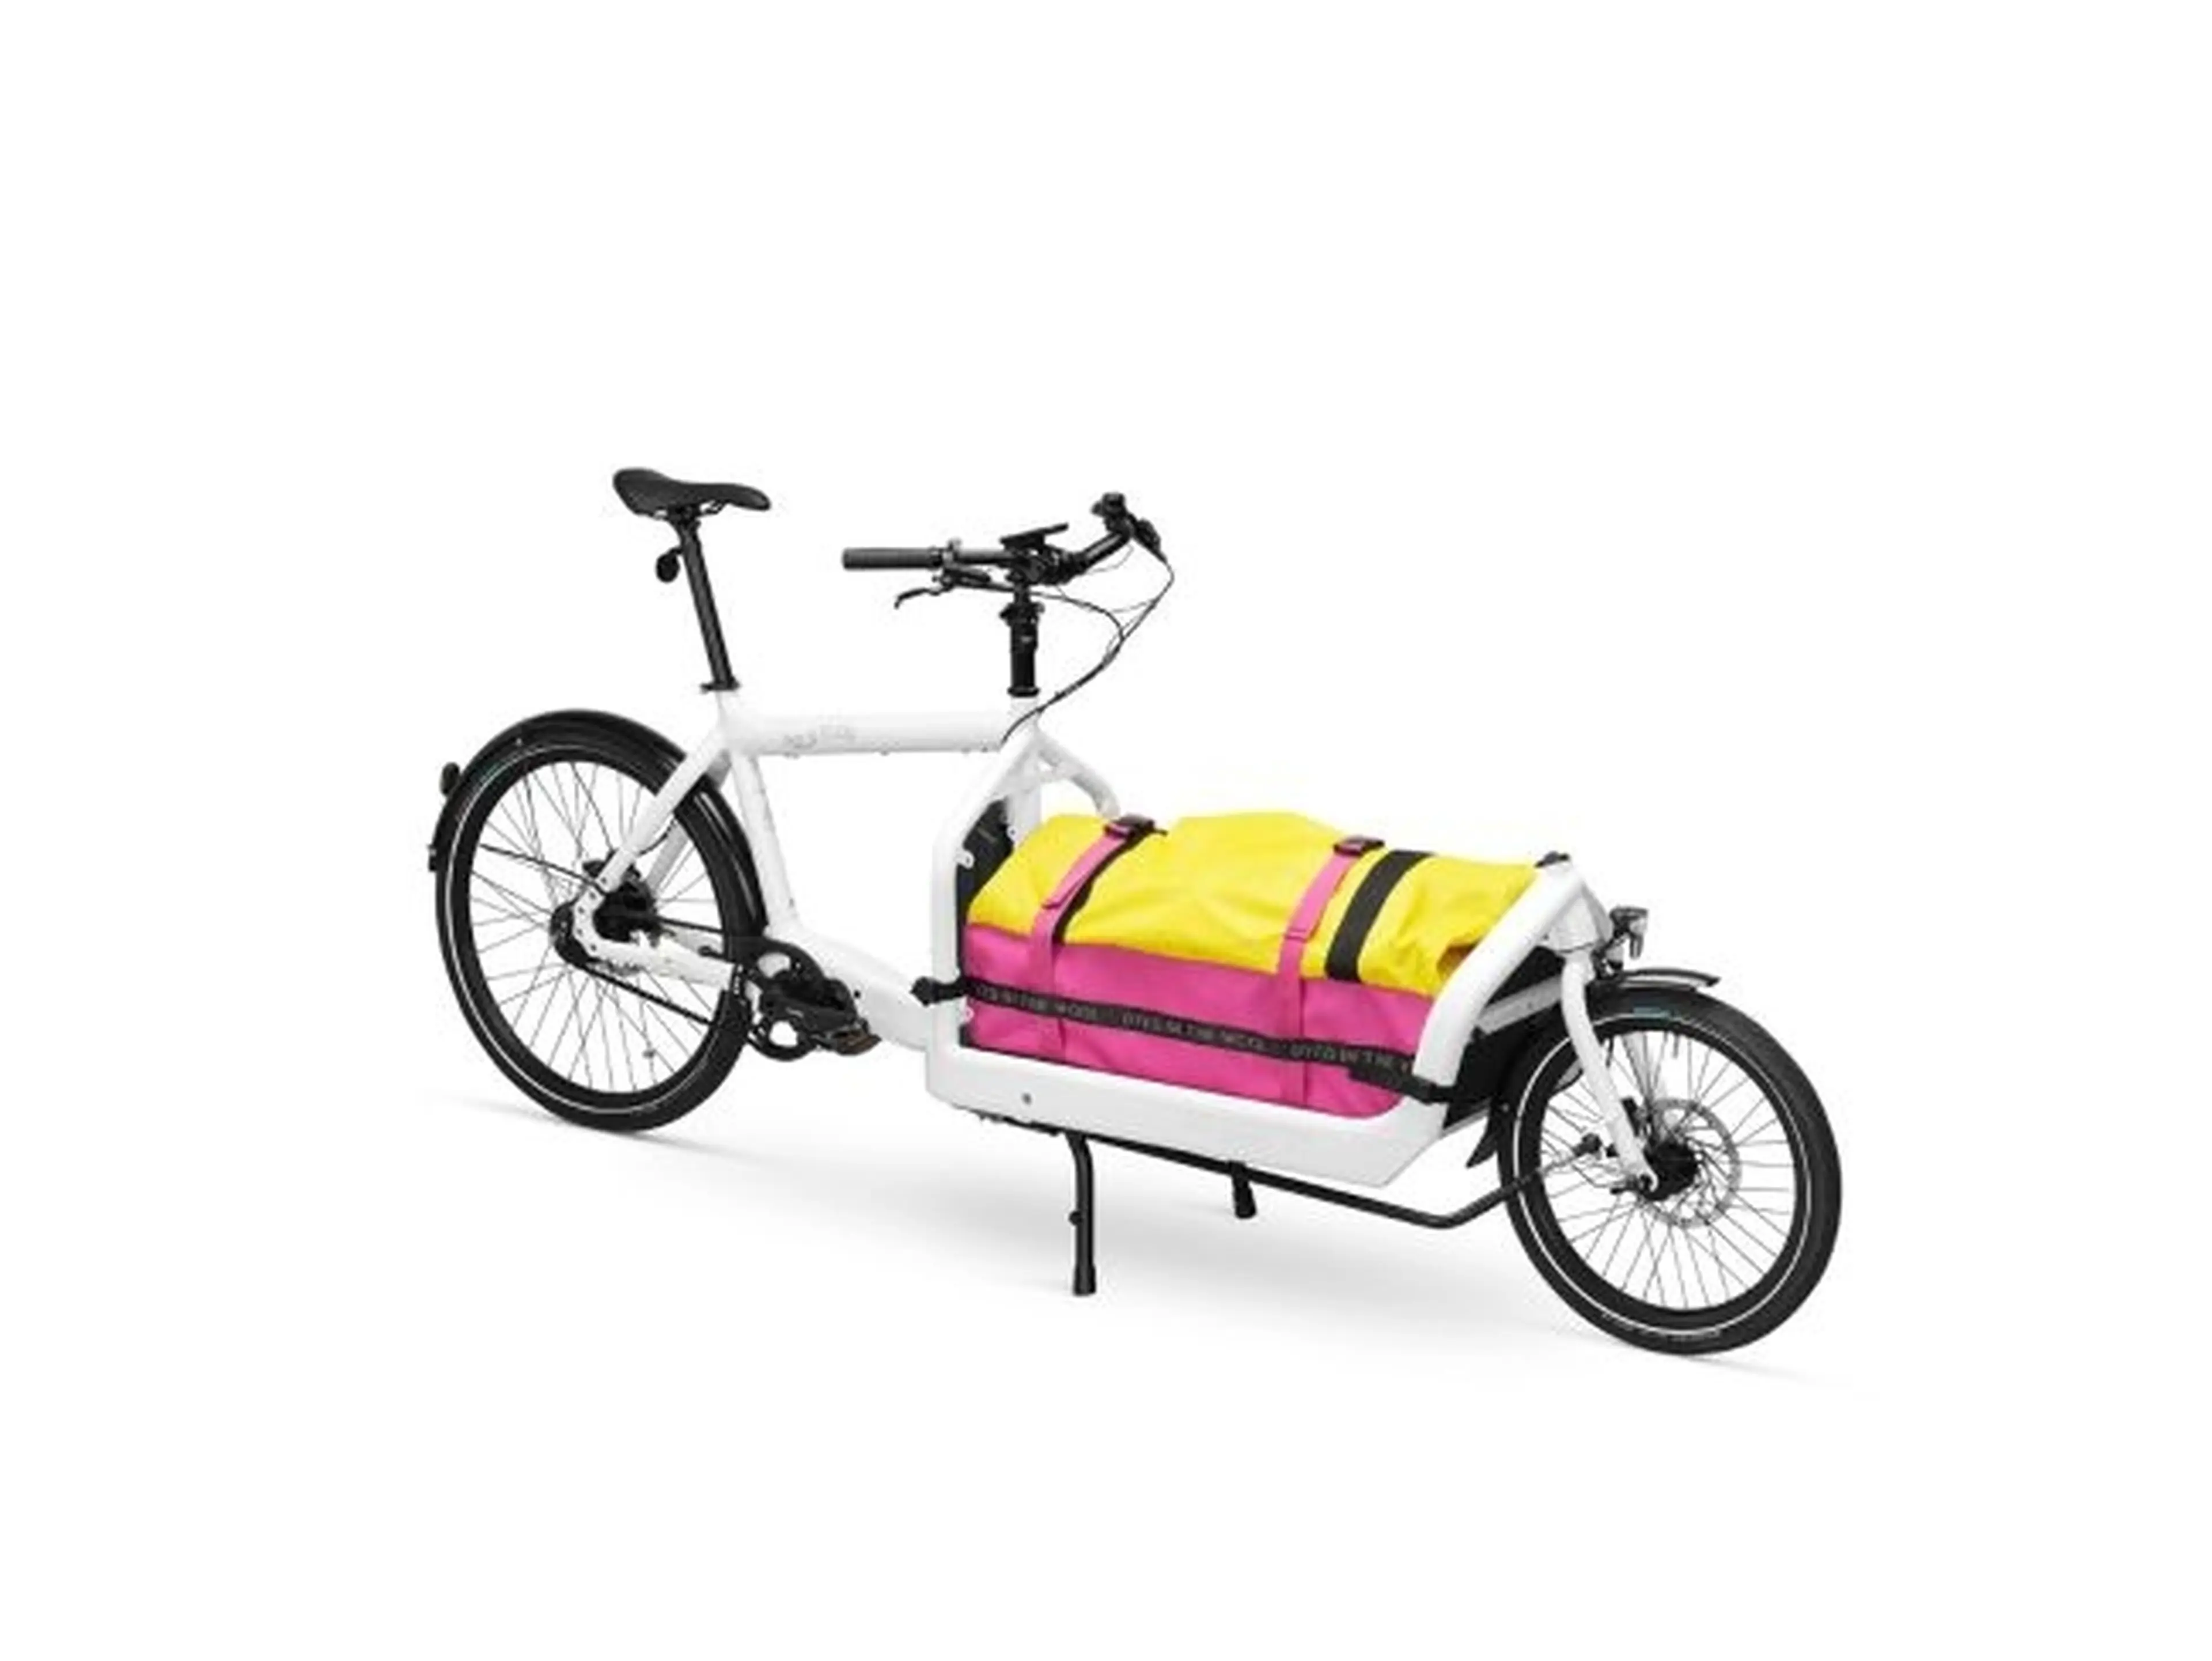 2. Larry vs harry, E Bullitt, cargo bike,bicicleta cargo. E6100 EP8